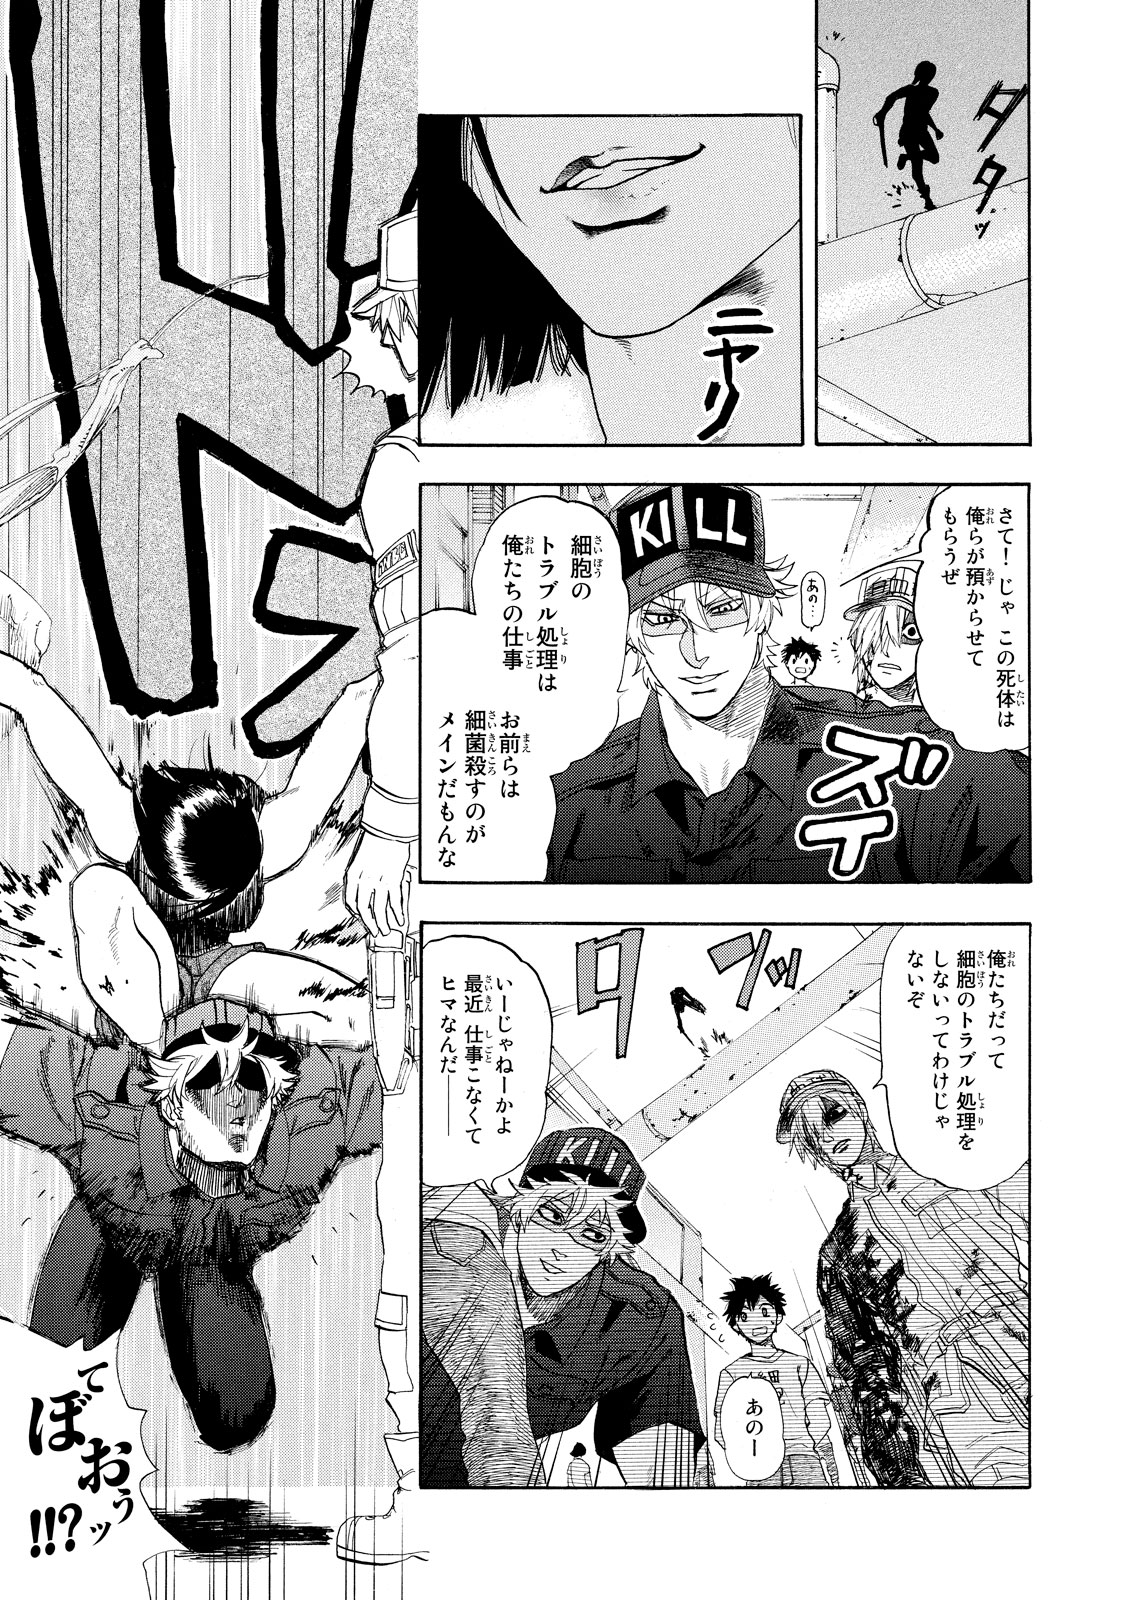 Hataraku Saibou - Chapter 8 - Page 5